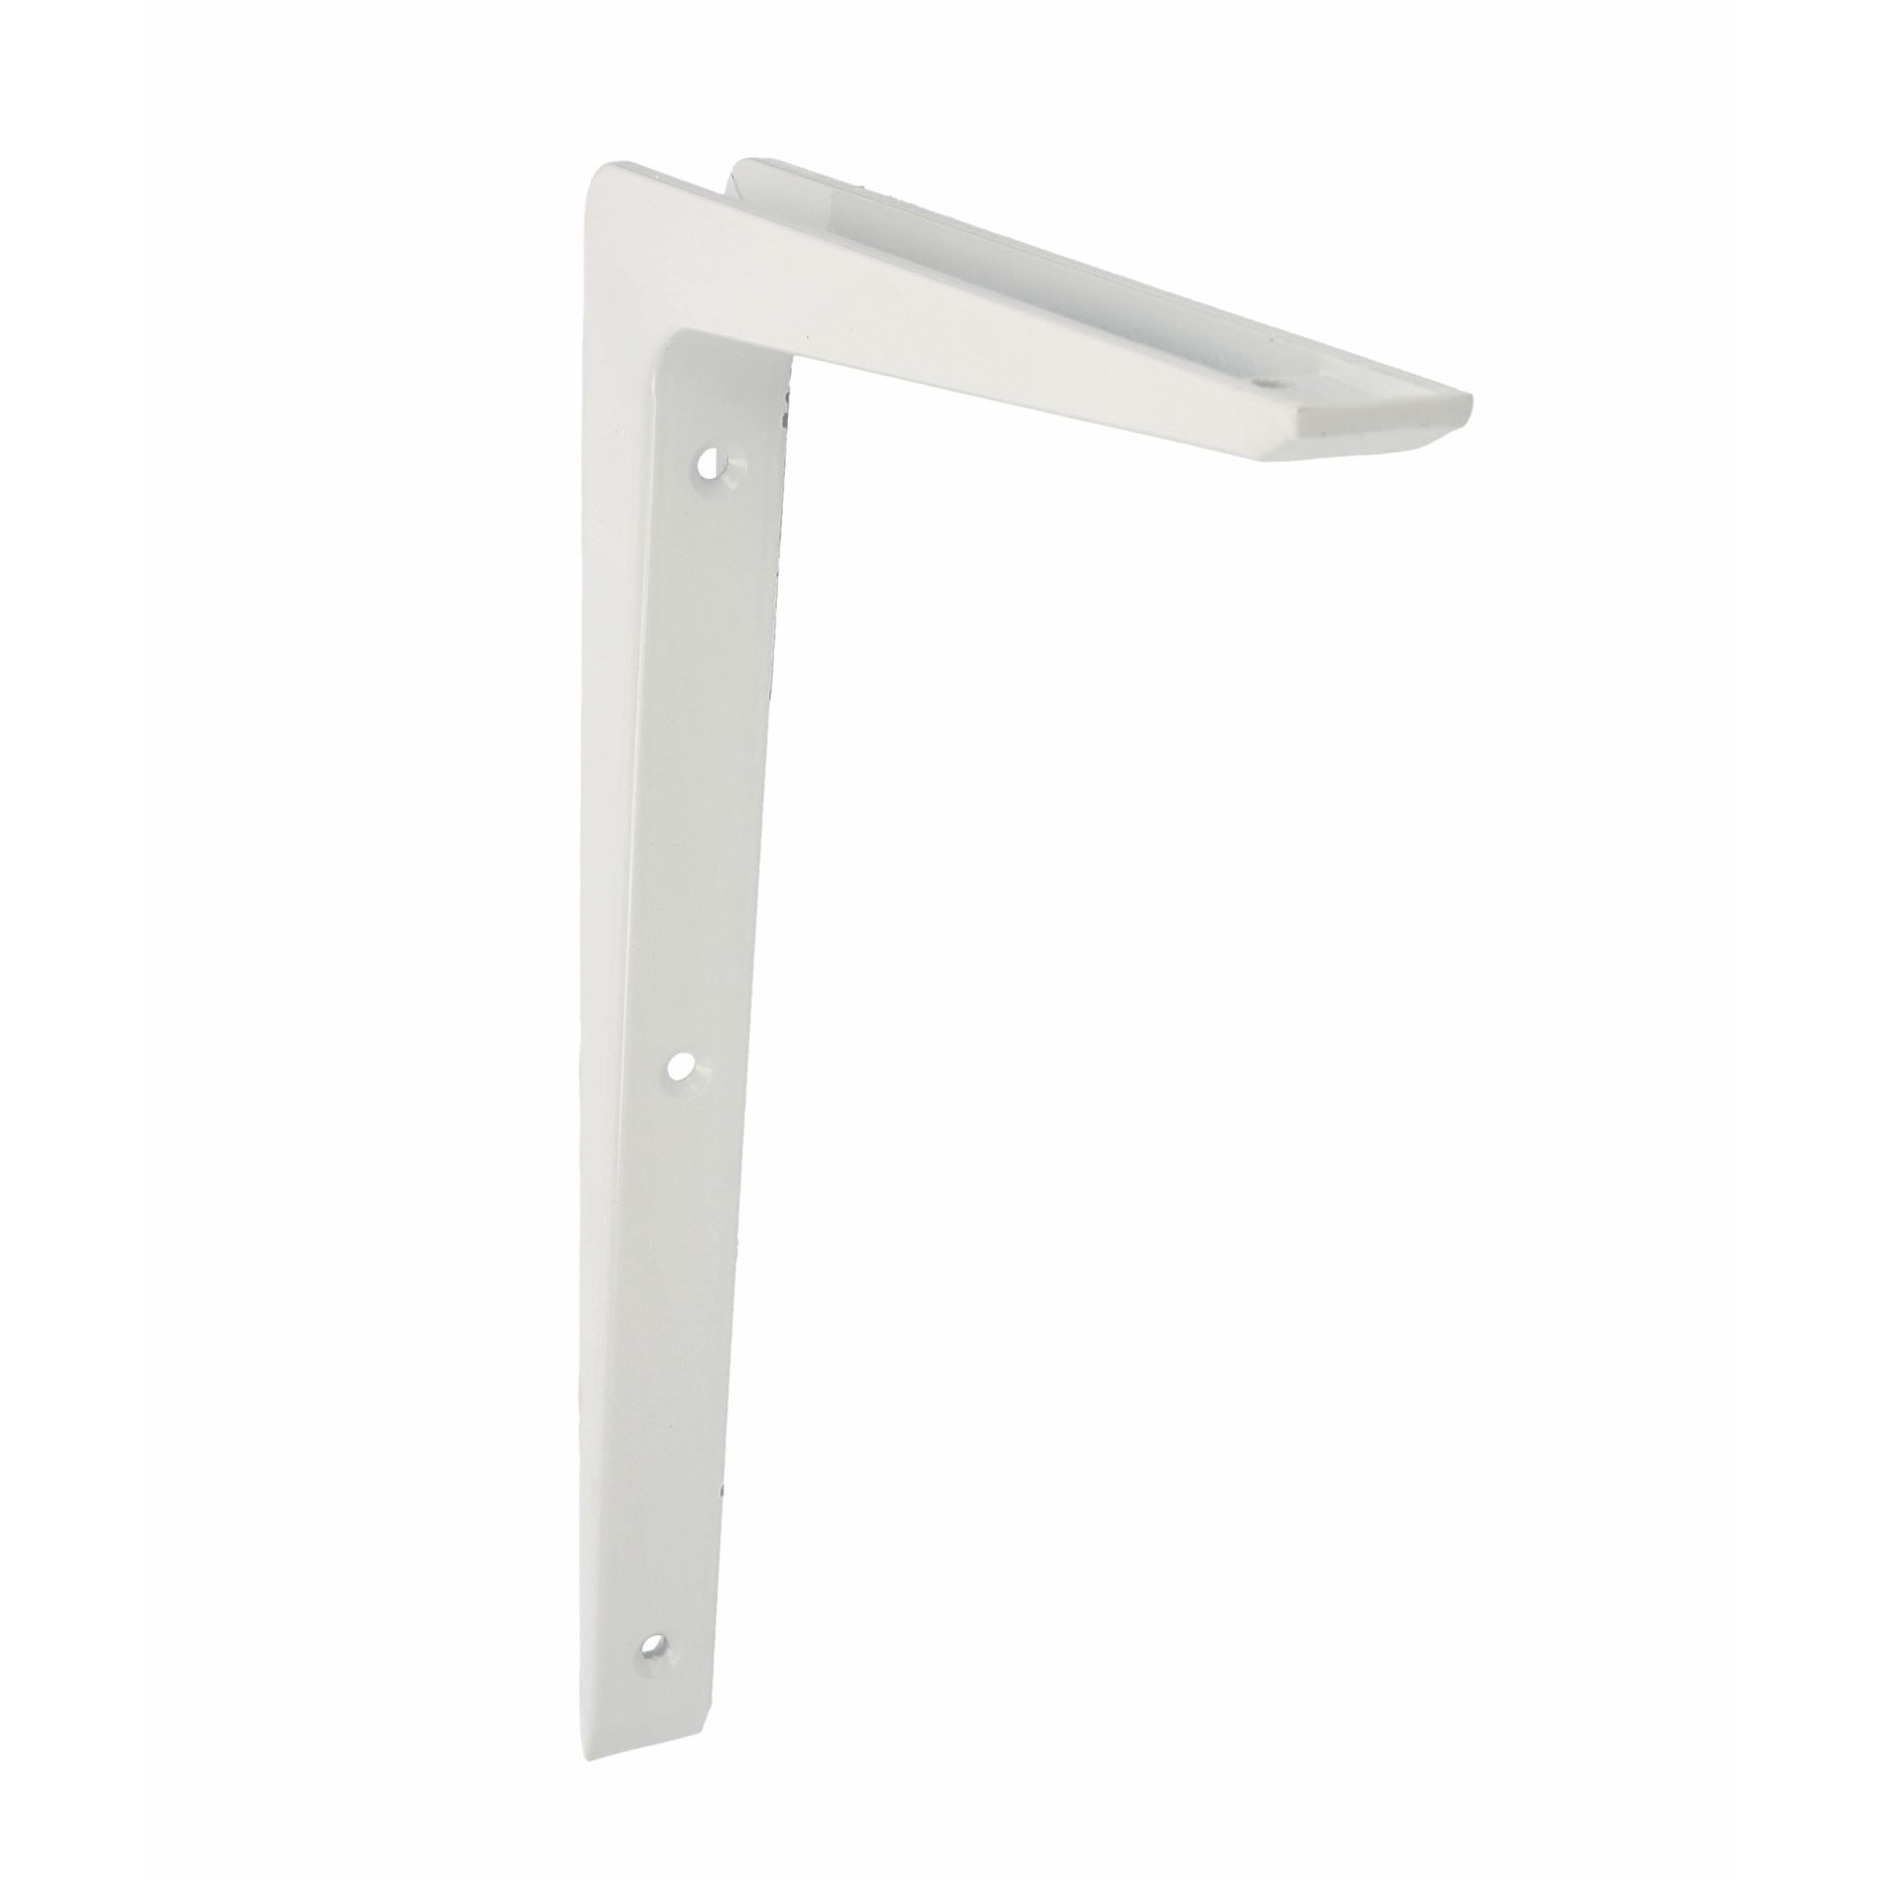 AMIG Plankdrager-planksteun van aluminium gelakt wit H300 x B200 mm